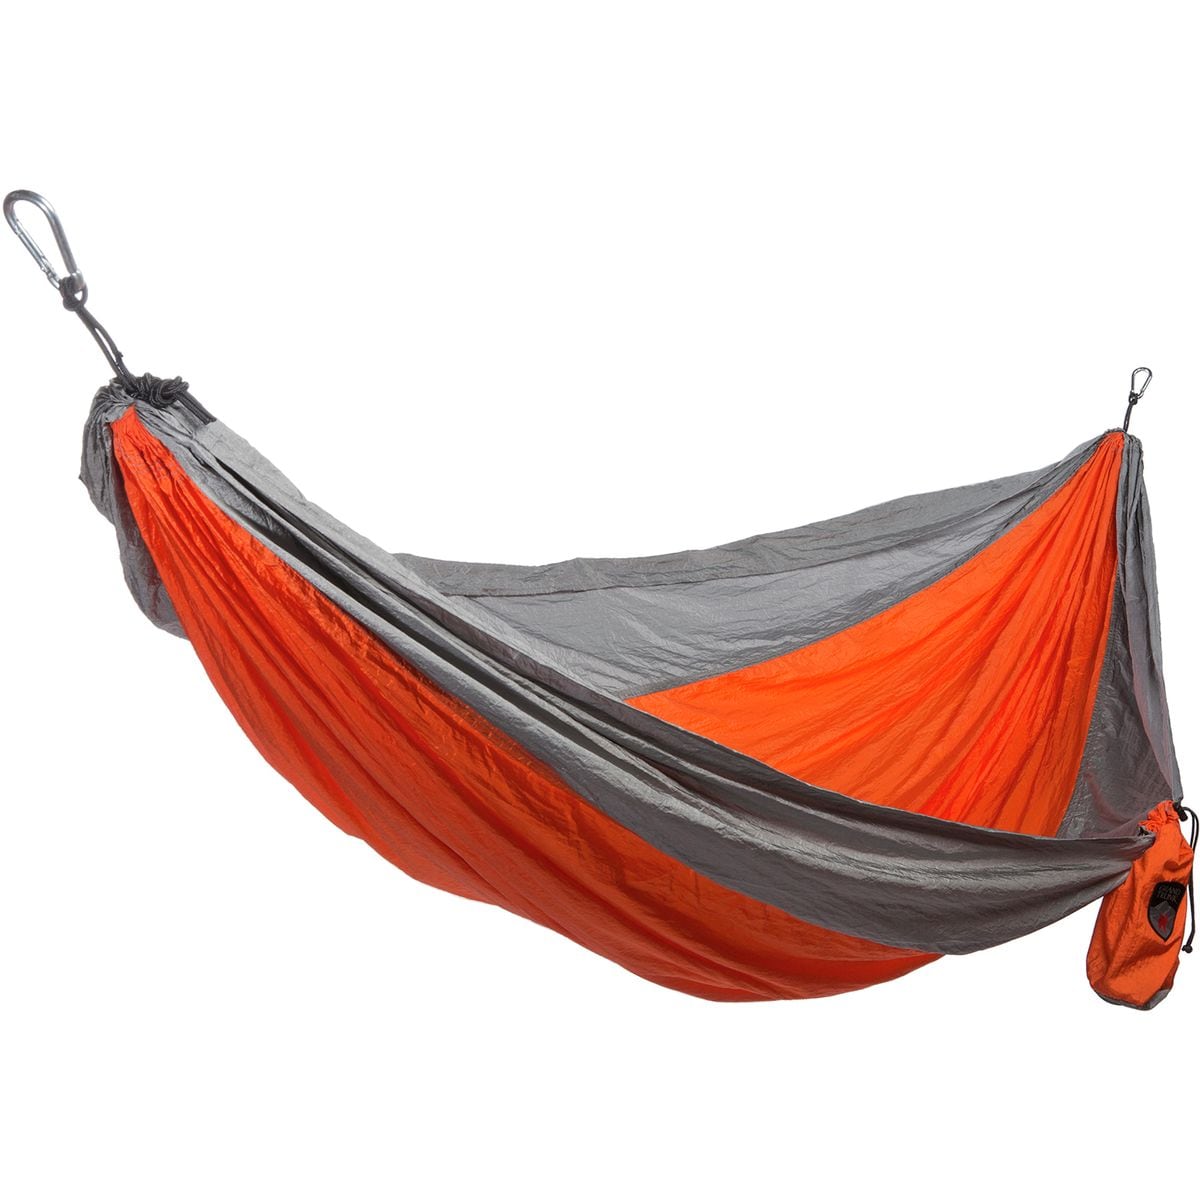 Grand Trunk Single Parachute Hammock Orange/Silver, One Size